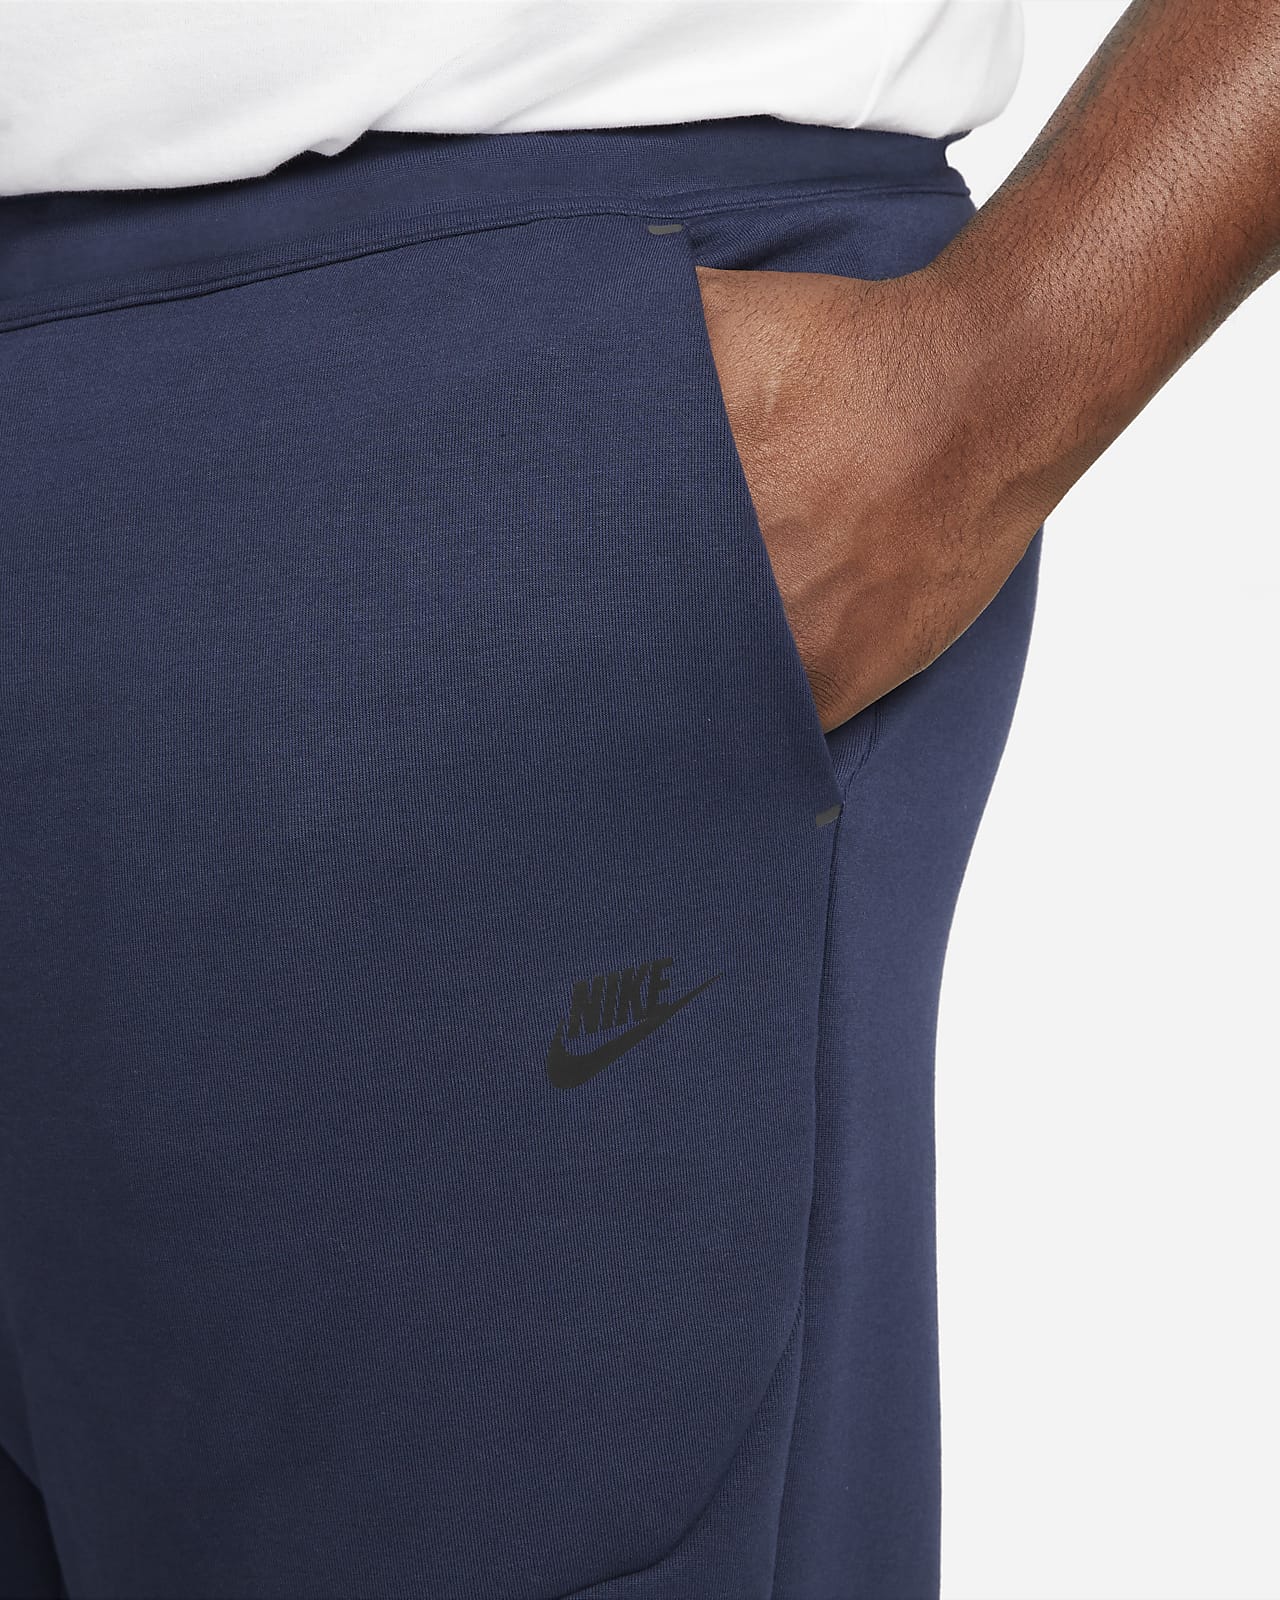 Nike Sportswear Tech Fleece Men's Joggers, Mineral Teal/Black, Medium :  : Clothing, Shoes & Accessories